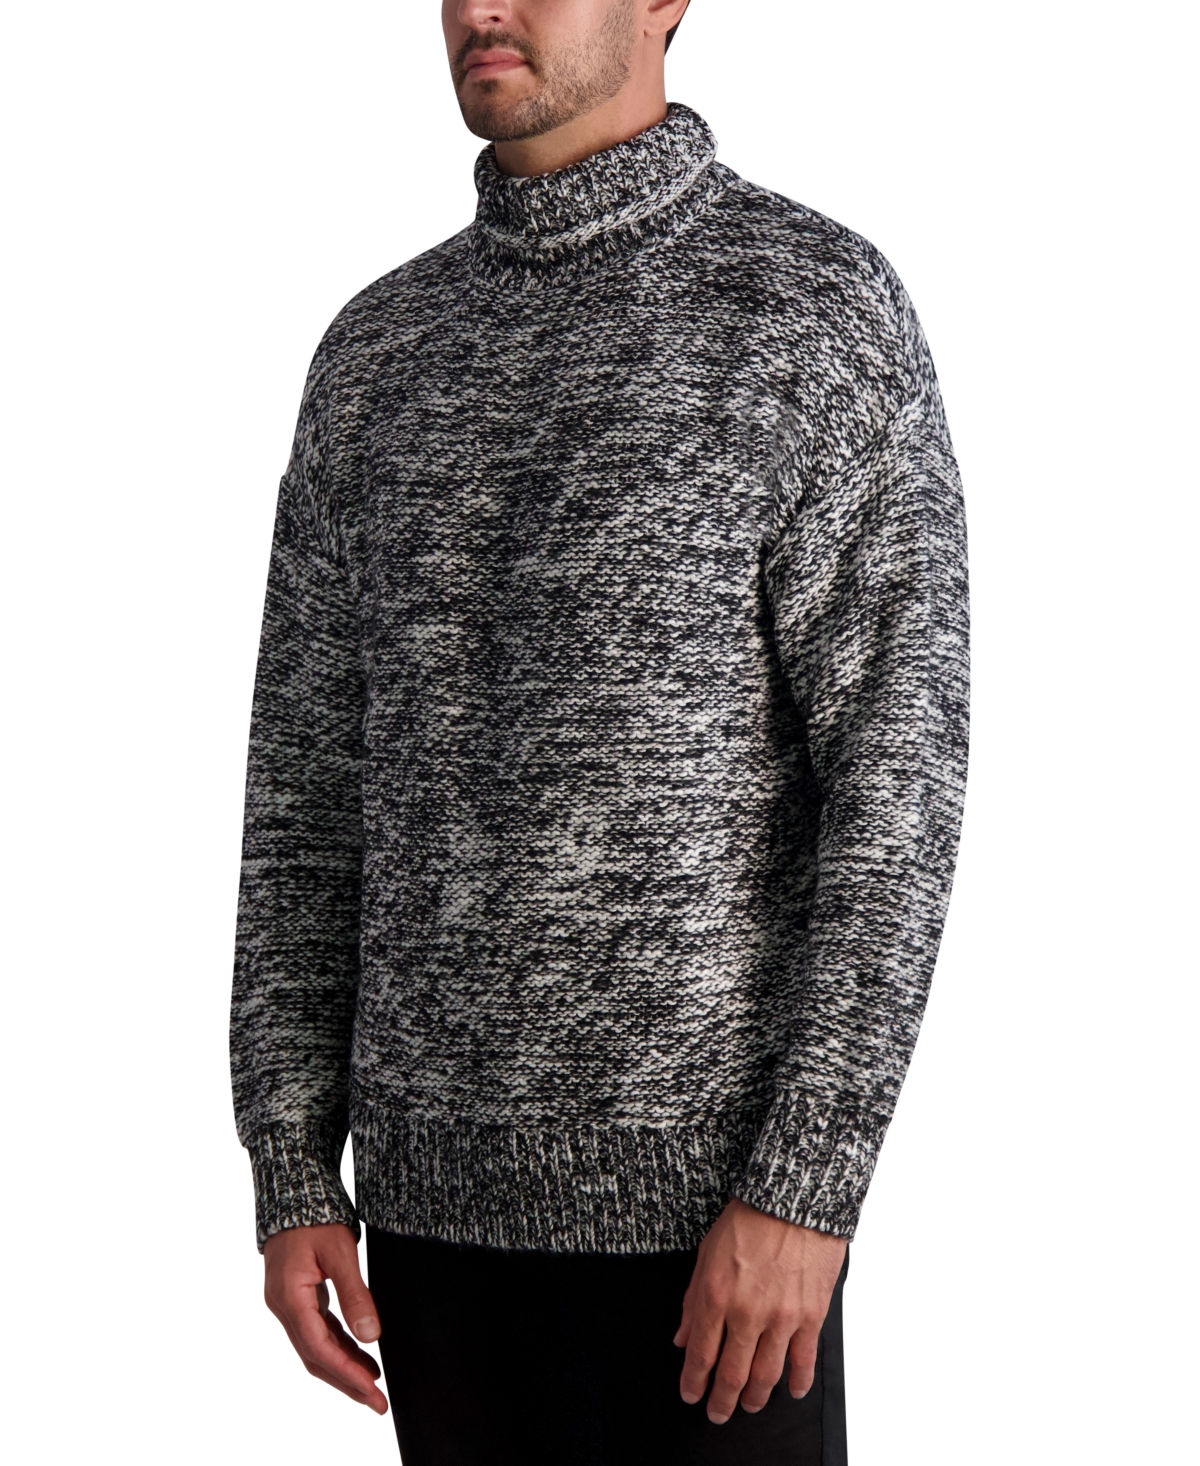 White Label Men's Oversized Marled Turtleneck Sweater - Black/white